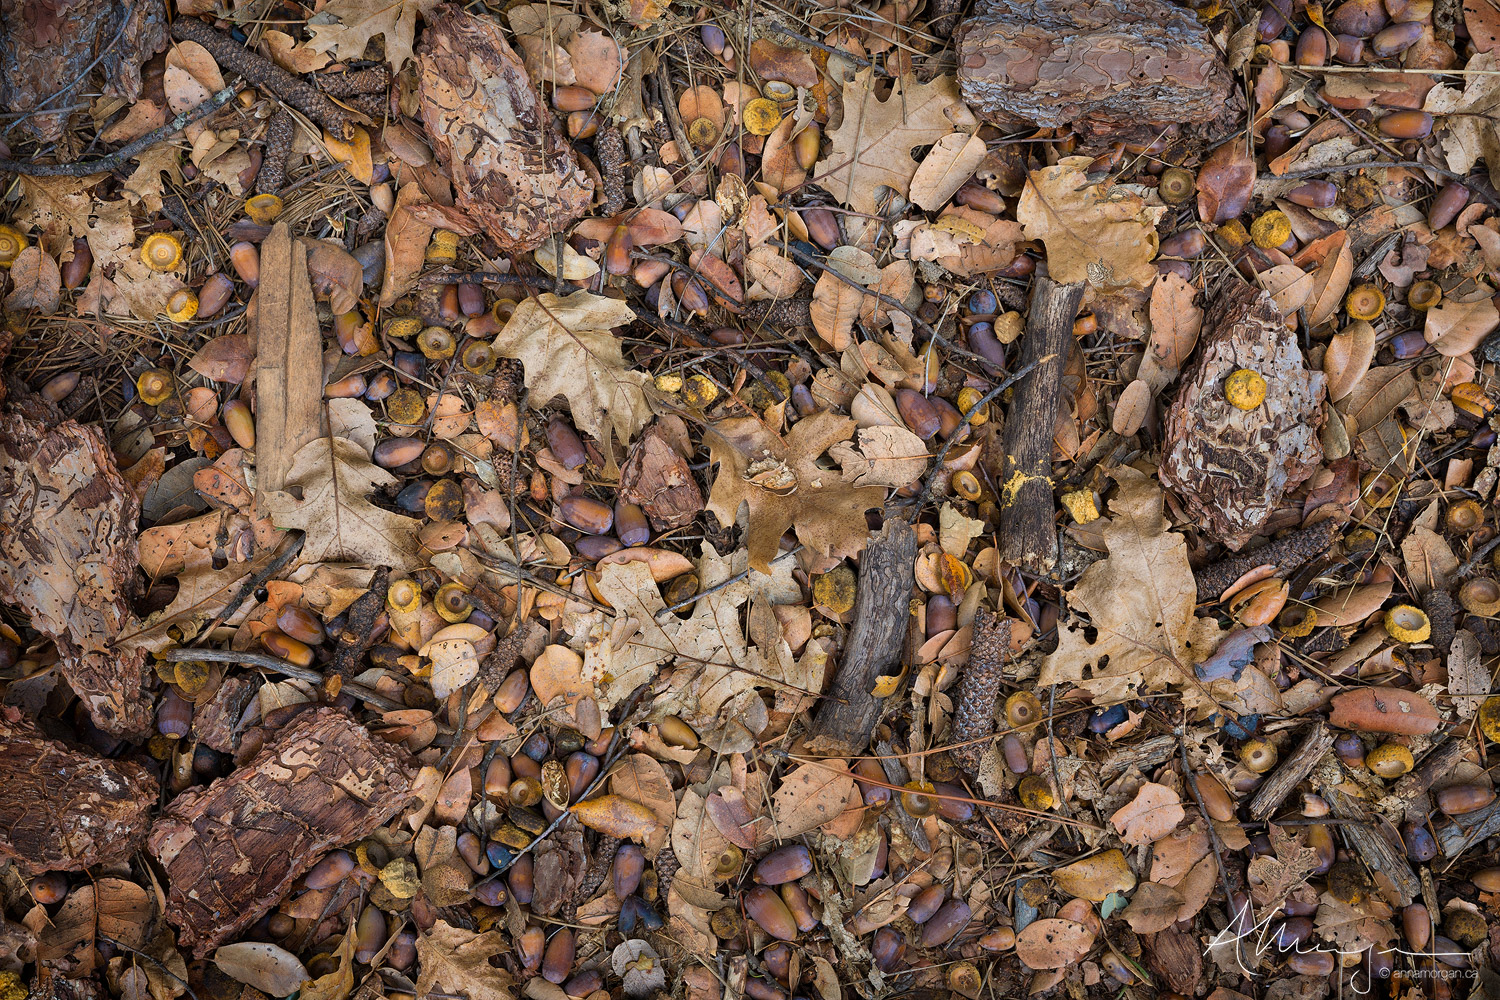 Autumn Oak leaves, bark and acorns scattered across the valley floor in Yosemite National Park, California